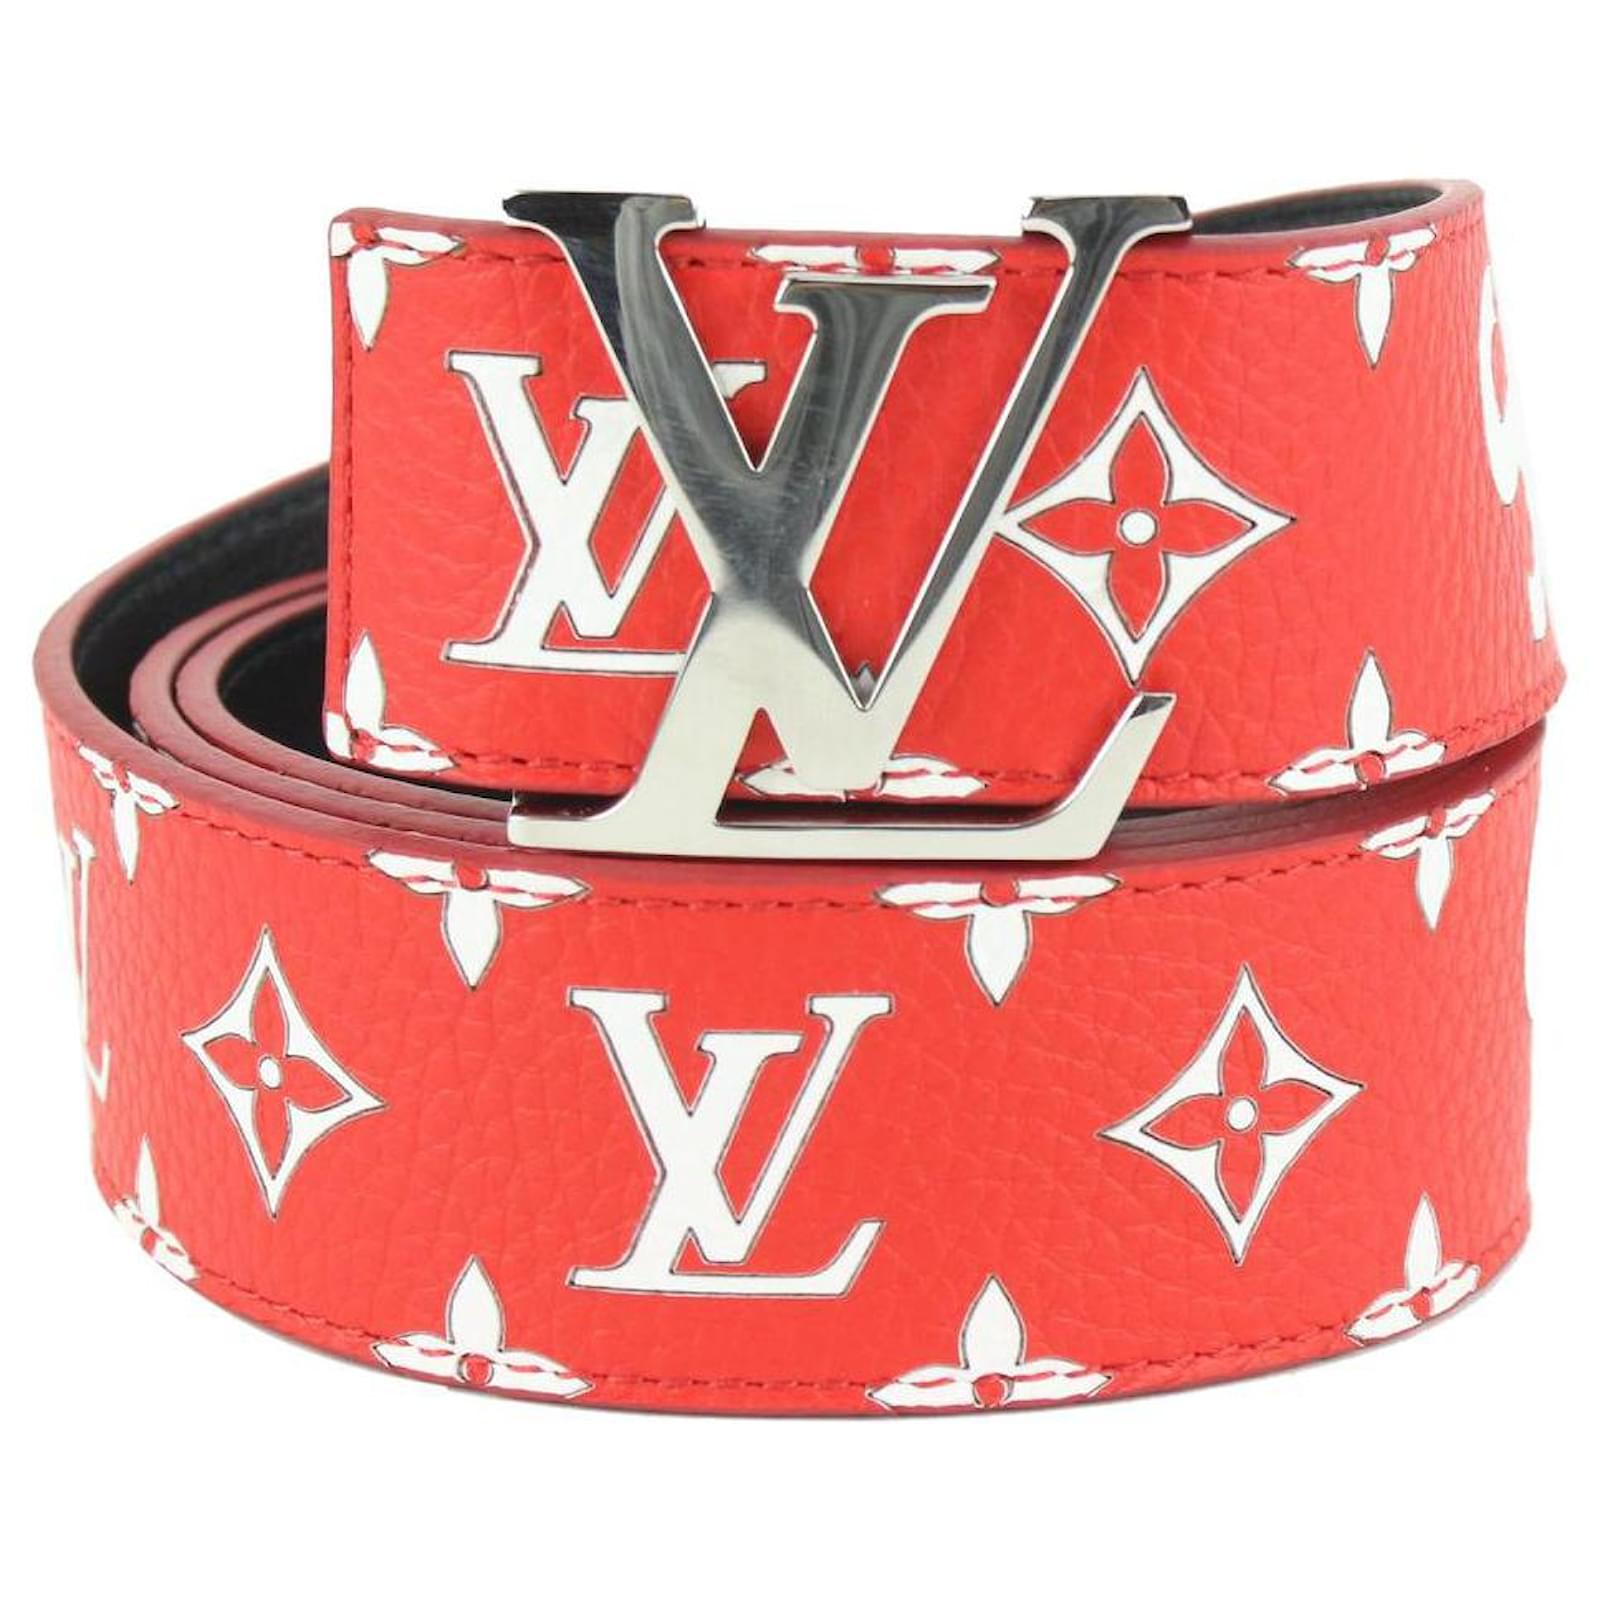 Louis Vuitton Initials Monogram Belt  Louis vuitton belt, Lv belt, Lv belt  women outfit